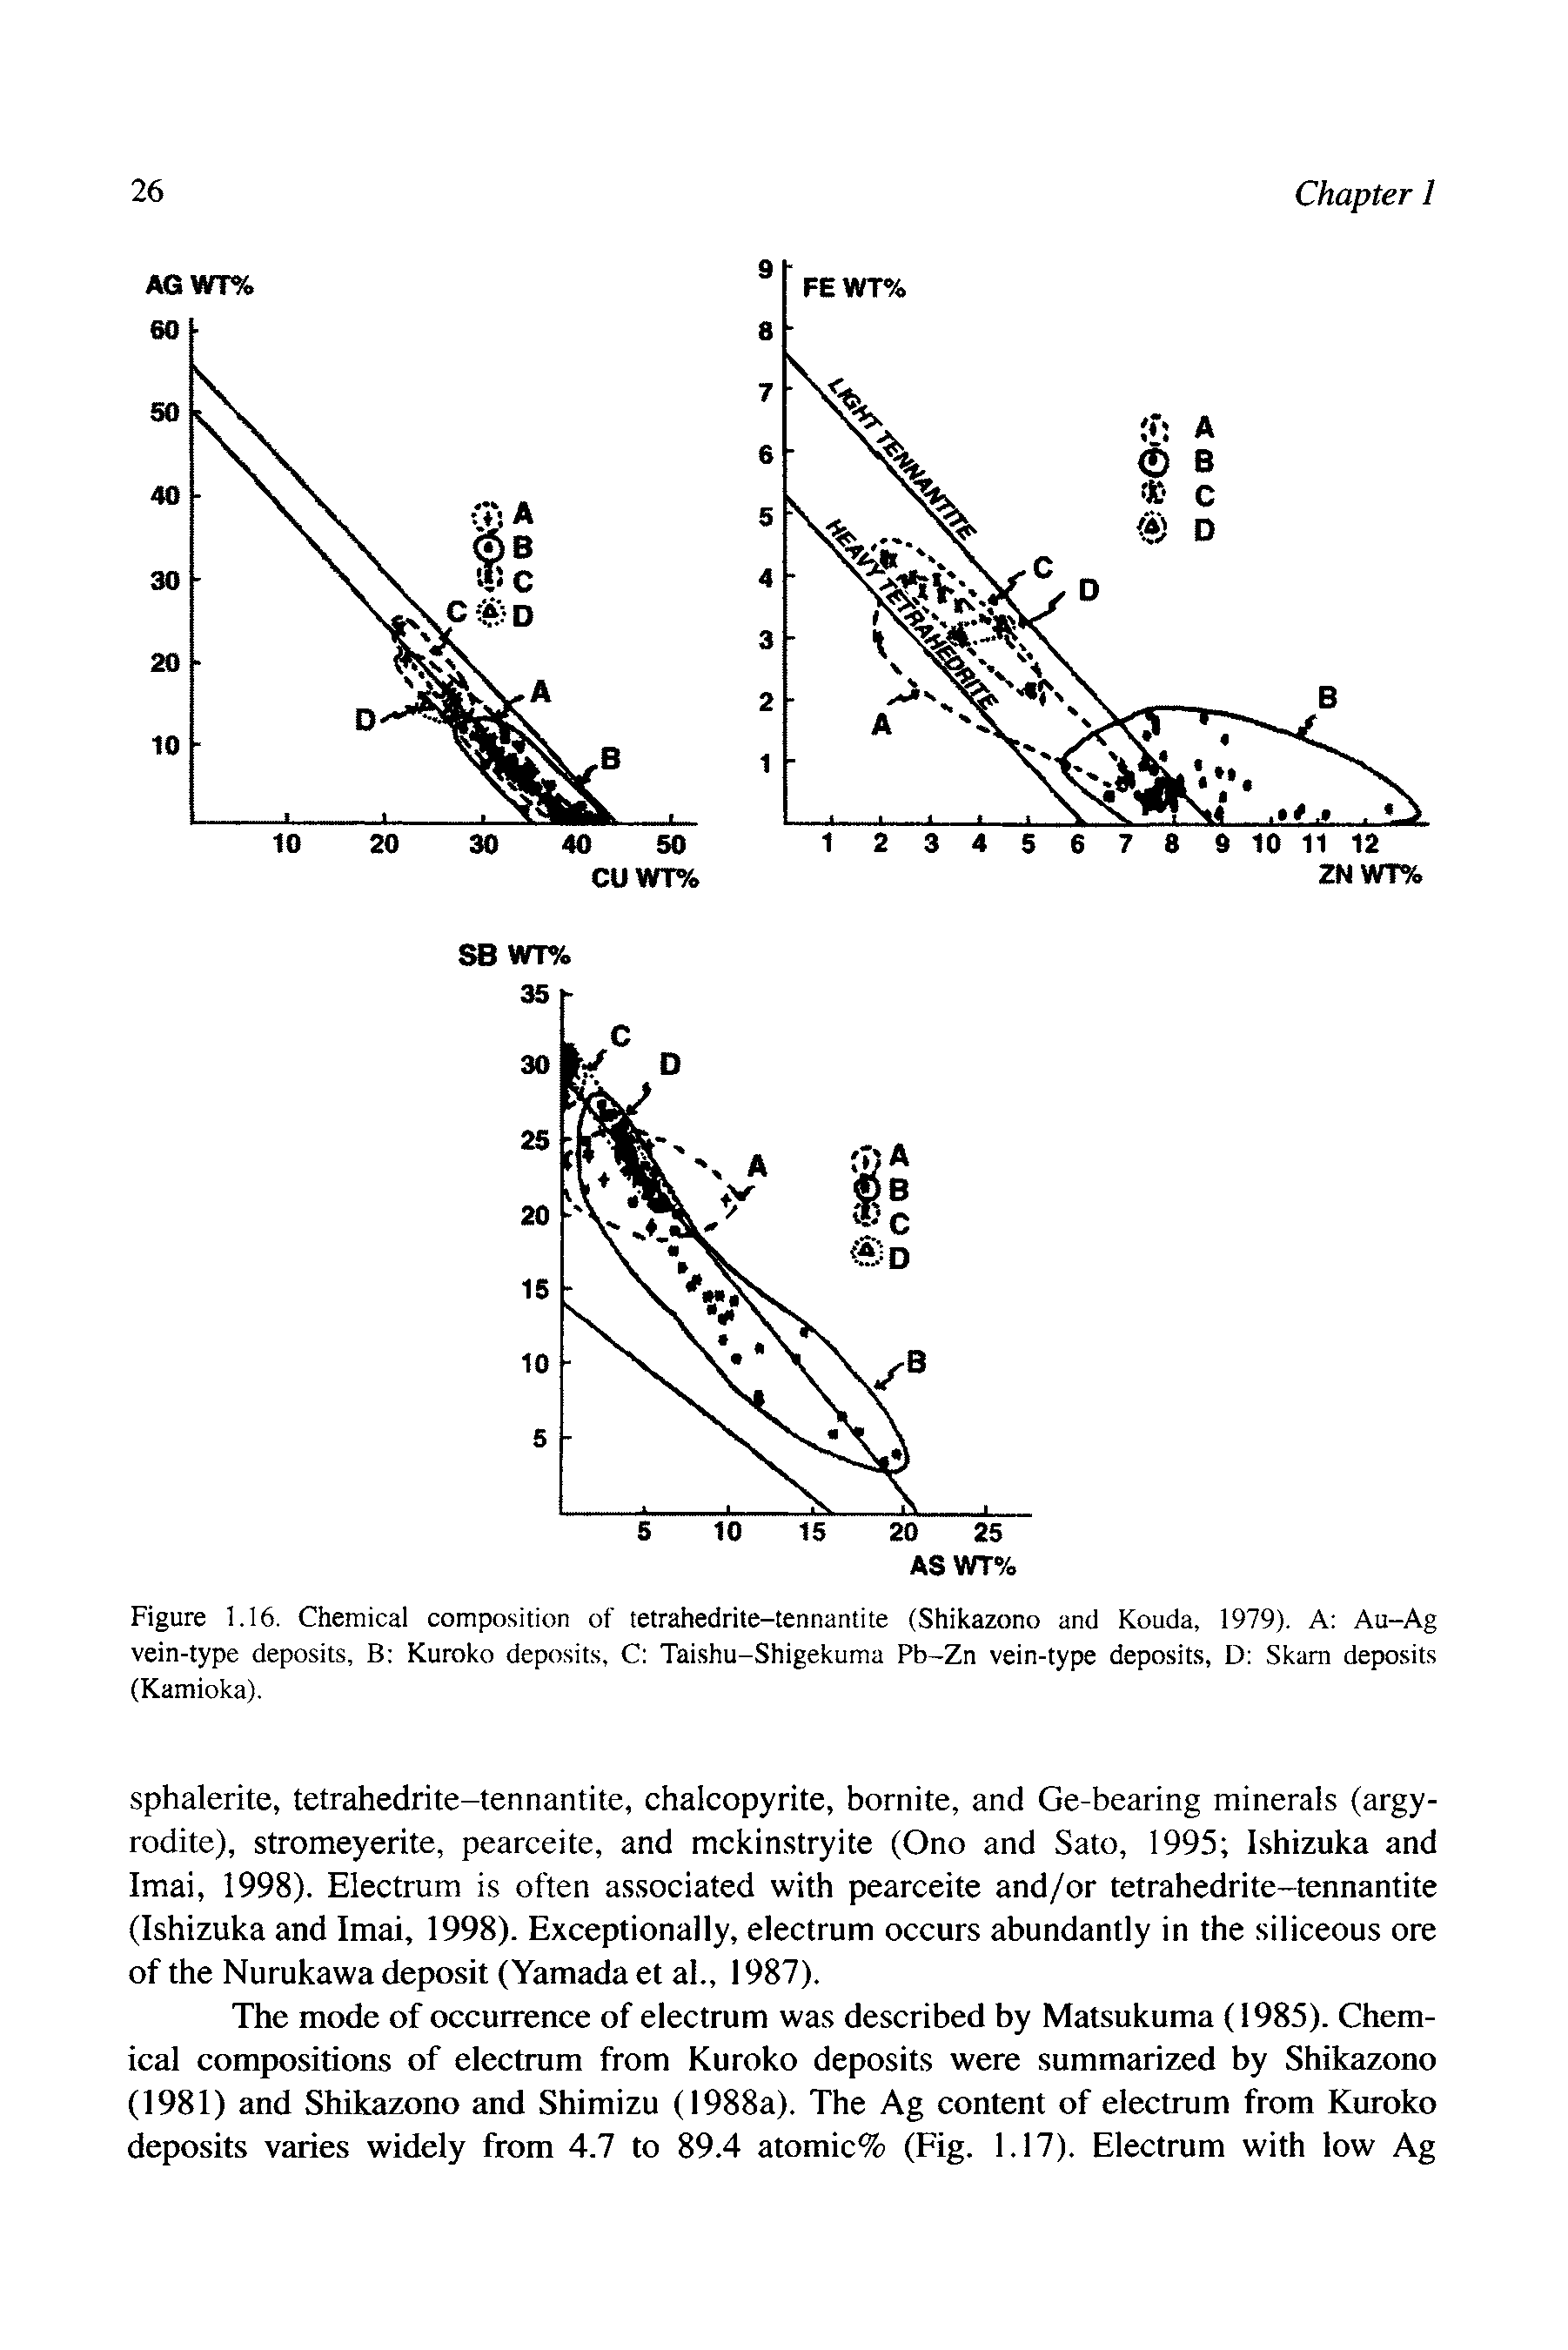 Figure 1.16. Chemical composition of tetrahedrite-tennantite (Shikazono and Kouda, 1979). A Au-Ag vein-type deposits, B Kuroko deposits, C Taishu-Shigekuma Pb-Zn vein-type deposits, D Skam deposits (Kamioka).